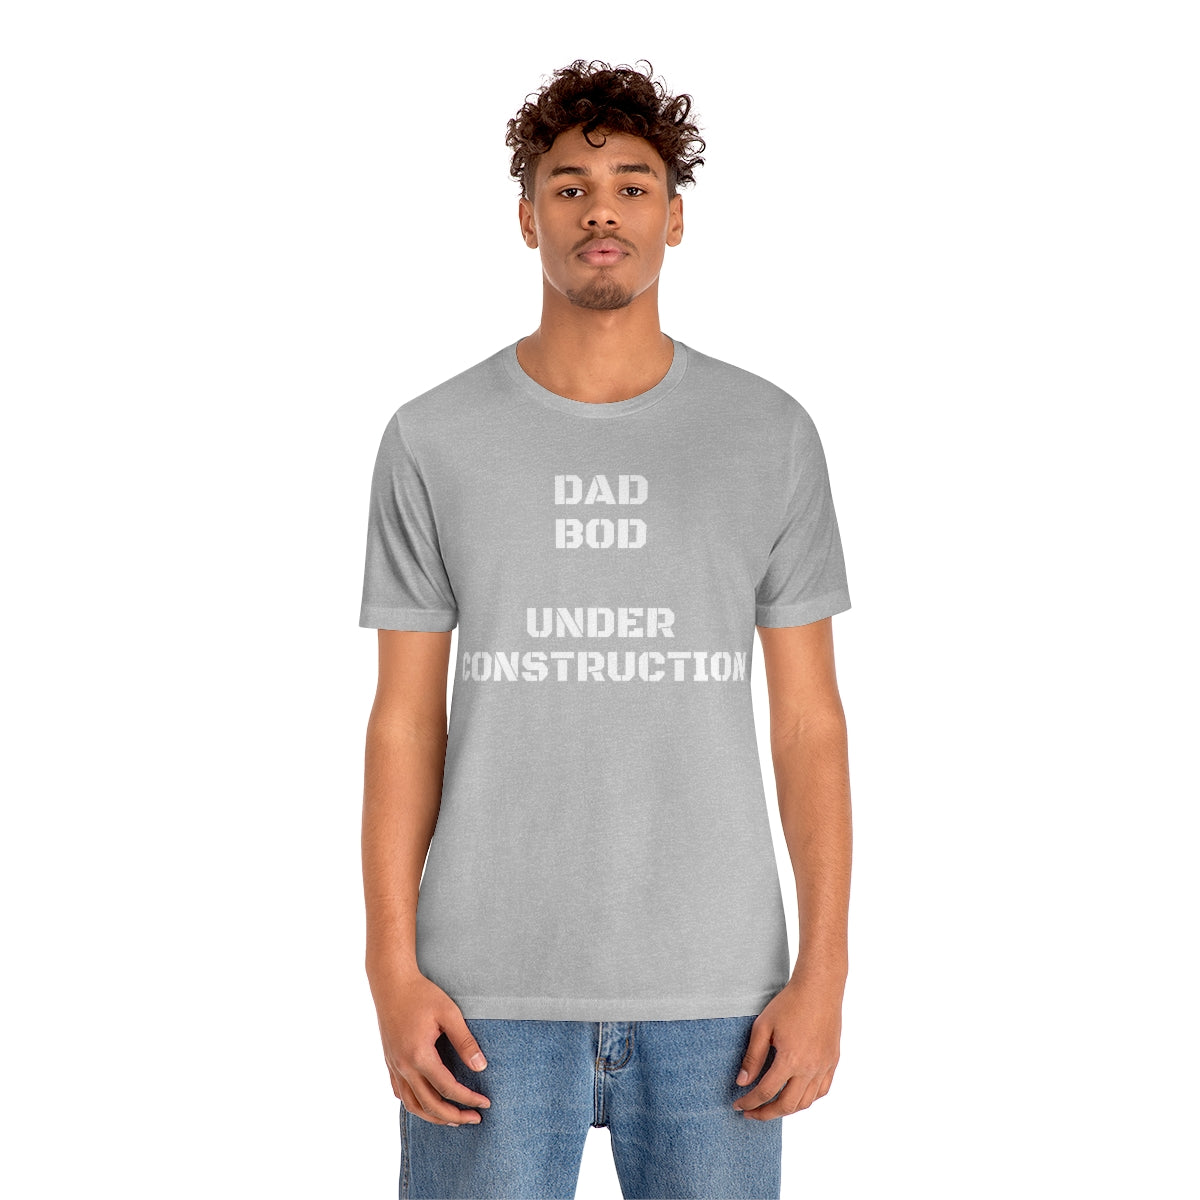 DAD BOD UNDER CONSTRUCTION - Unisex Jersey Short Sleeve Tee